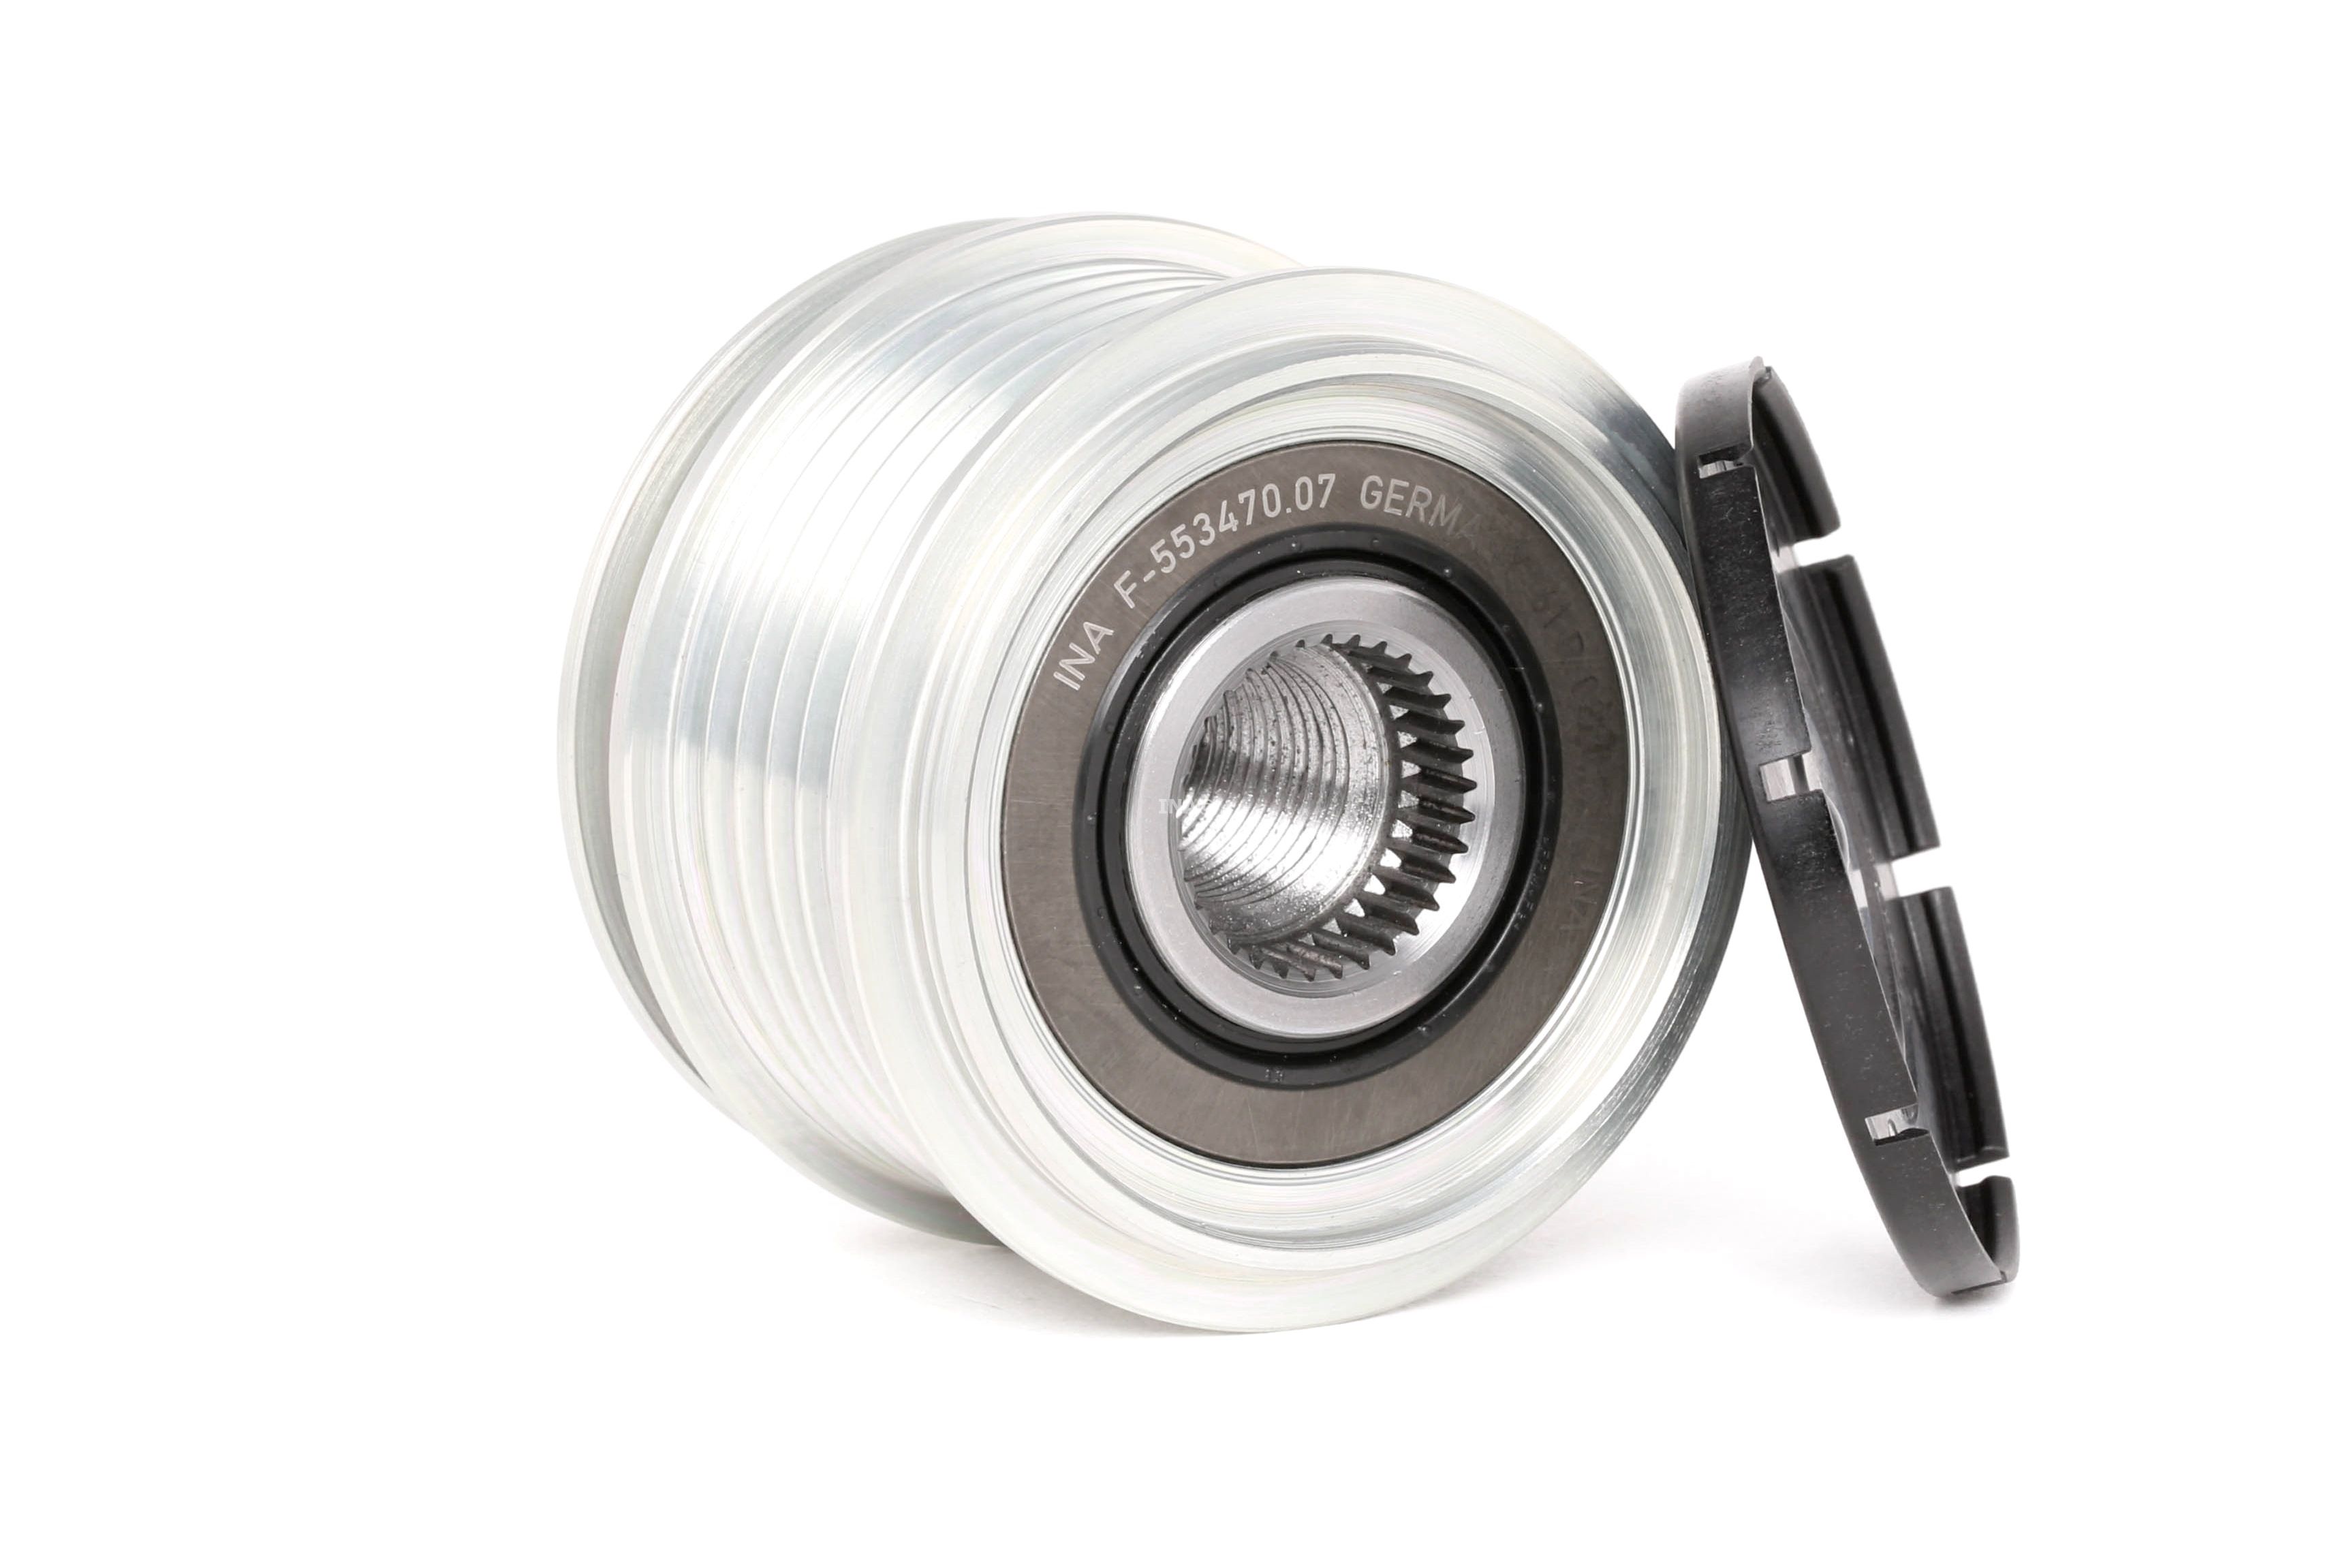 Alternator Freewheel Clutch INA 535 0012 10 - Repair kits for Porsche spare parts order